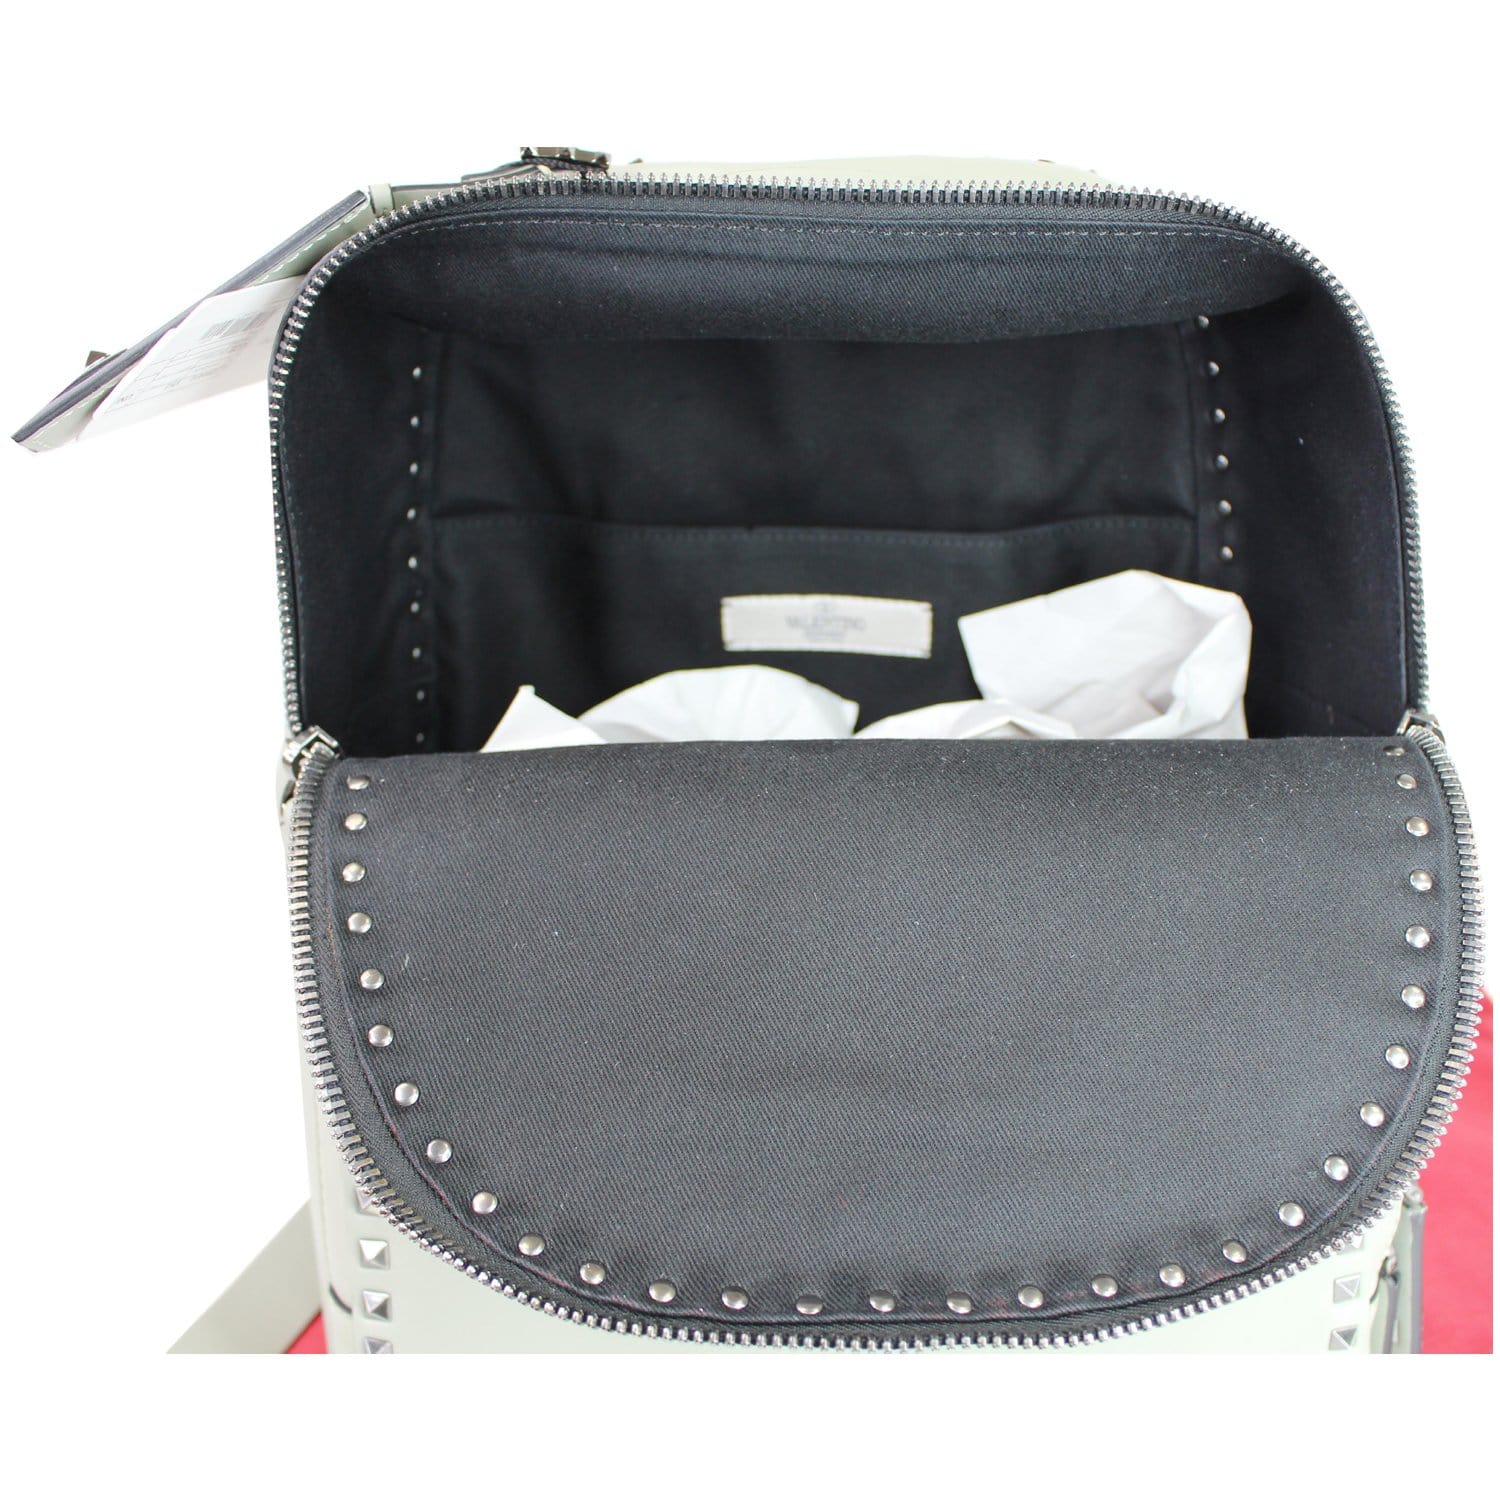 valentino backpack grey